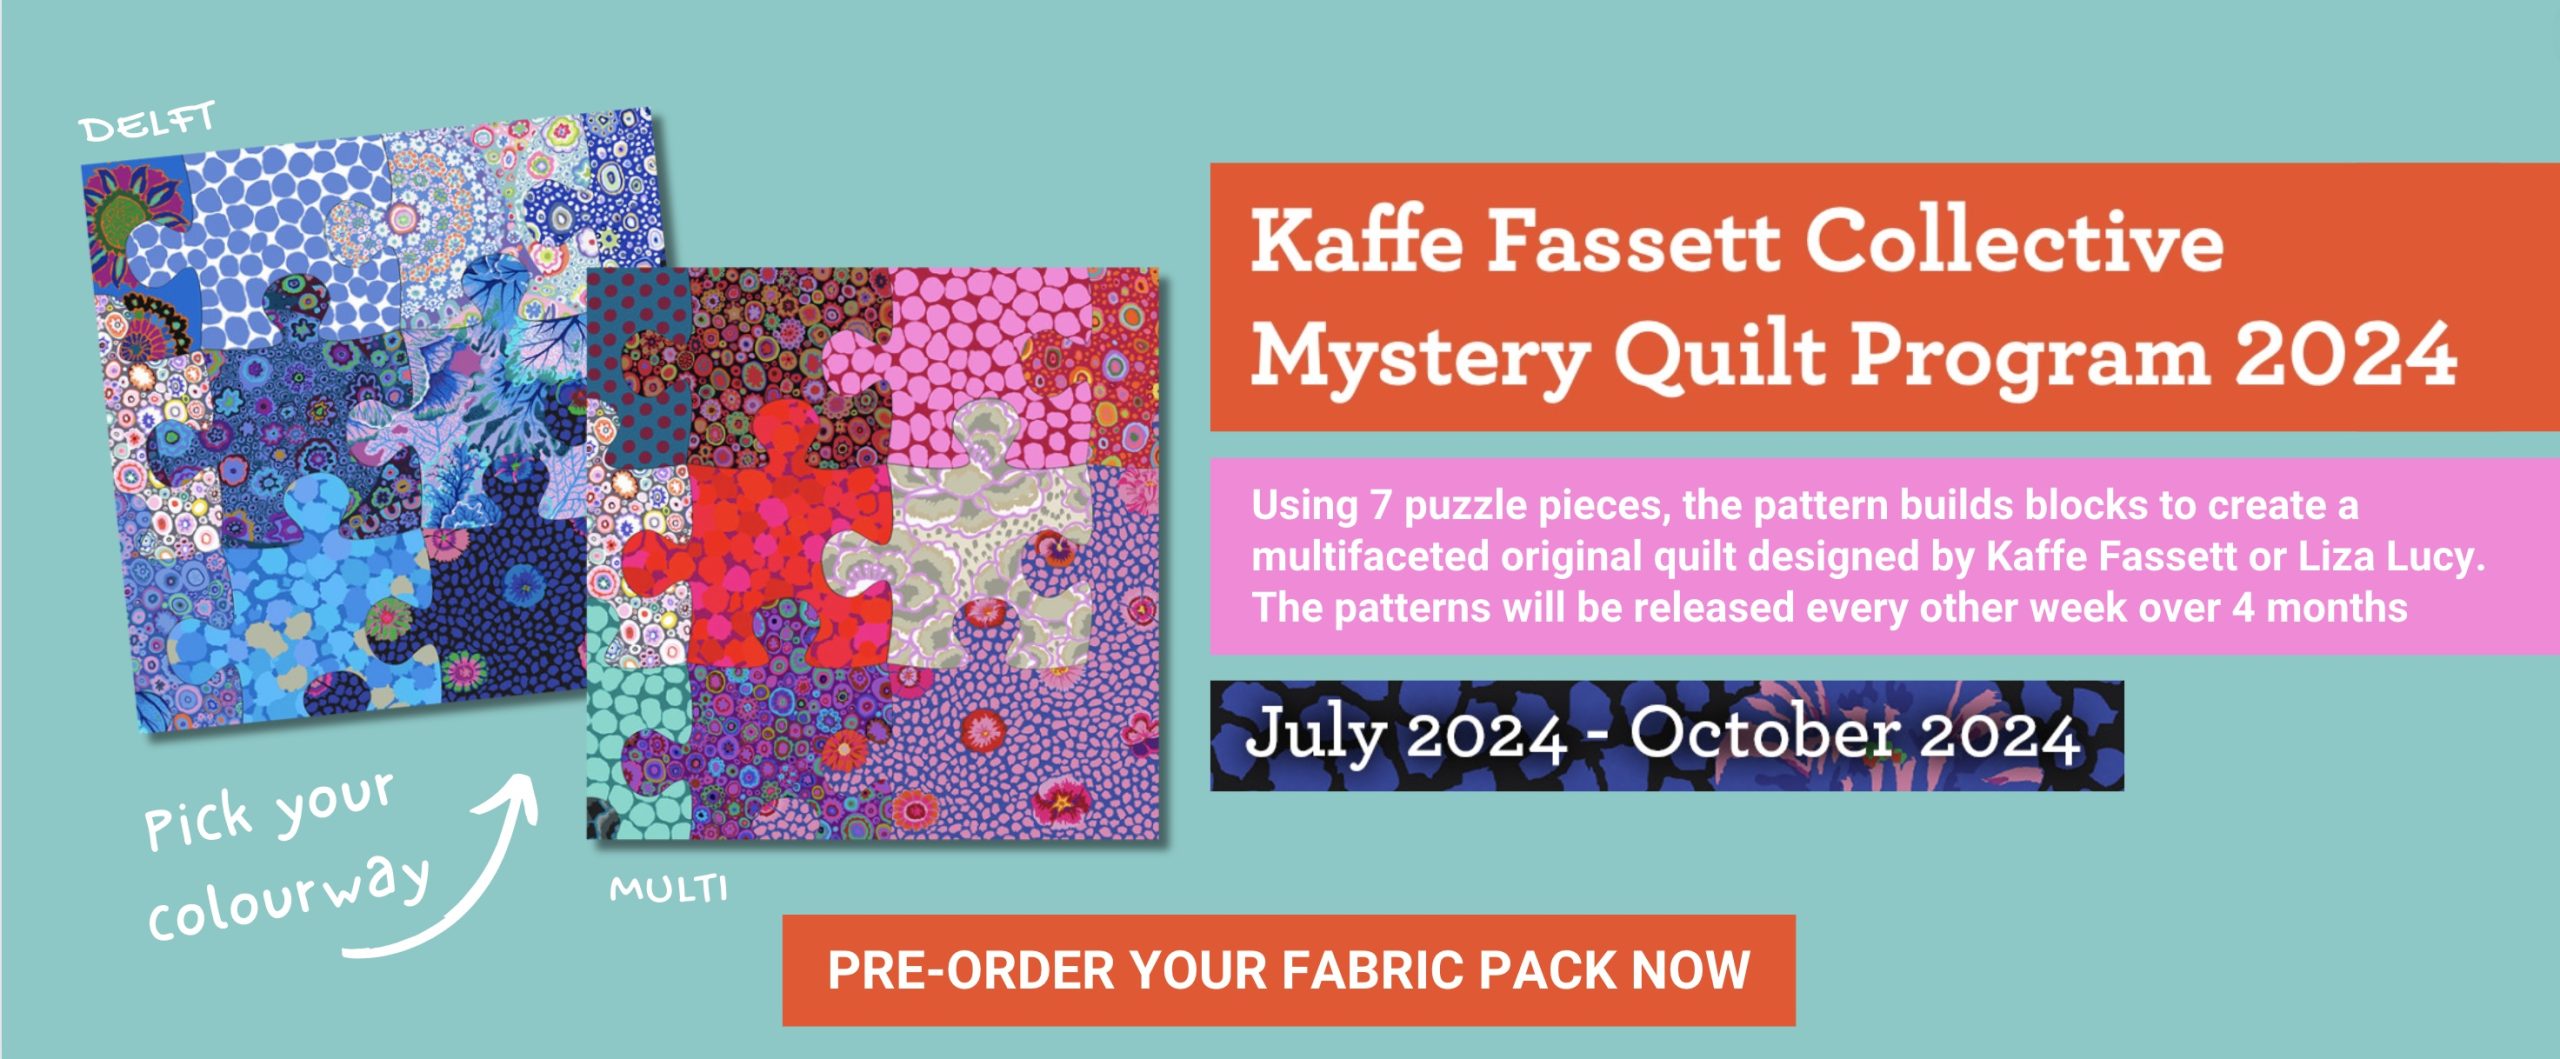 Kaffe Fassett Mystery Quilt Banner - Website